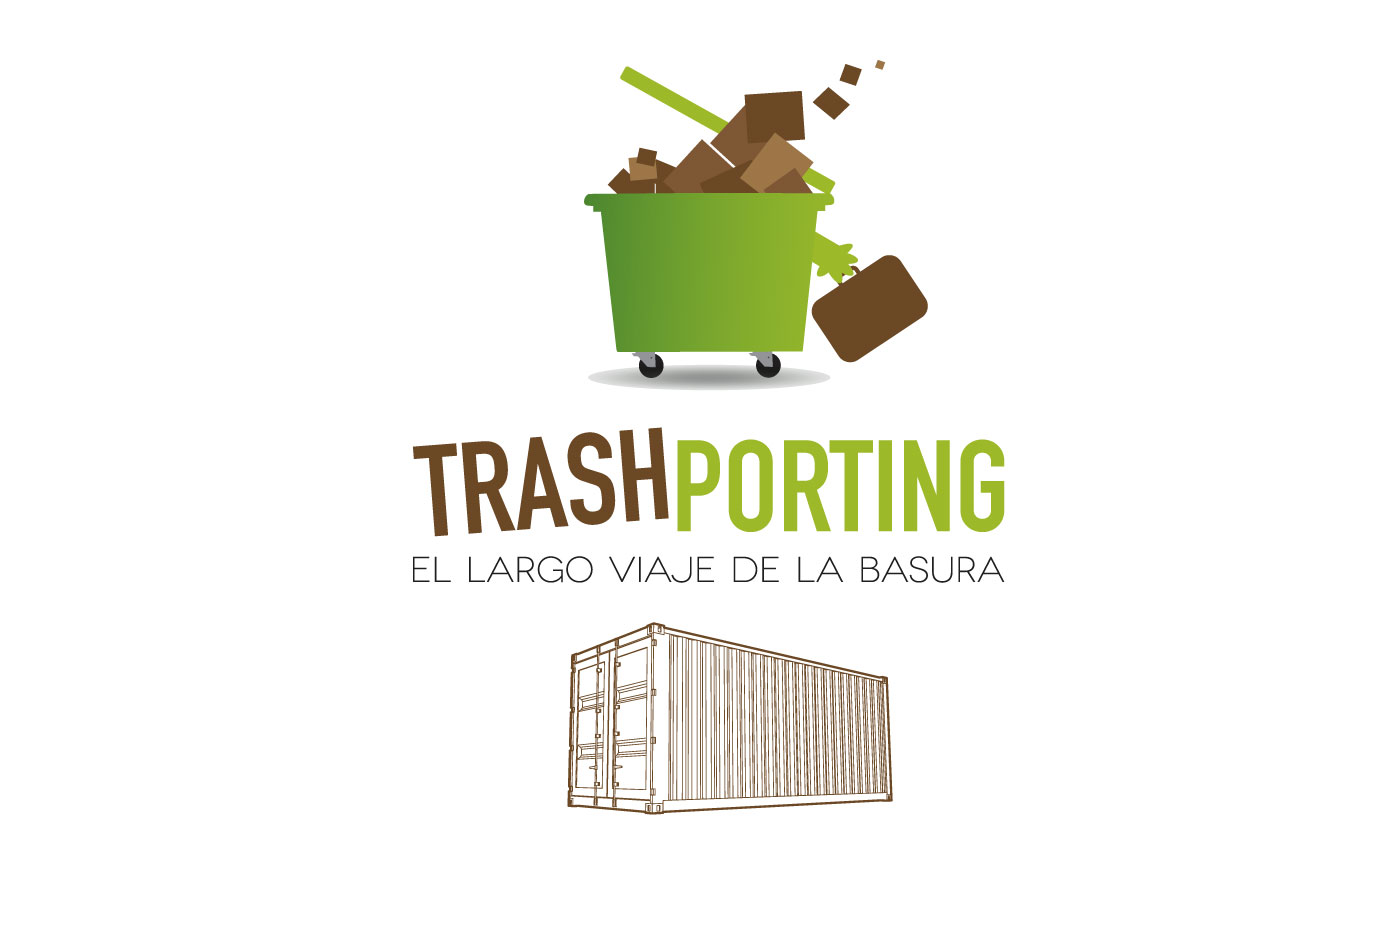 TrashPorting el largo viaje de la basura green marketing